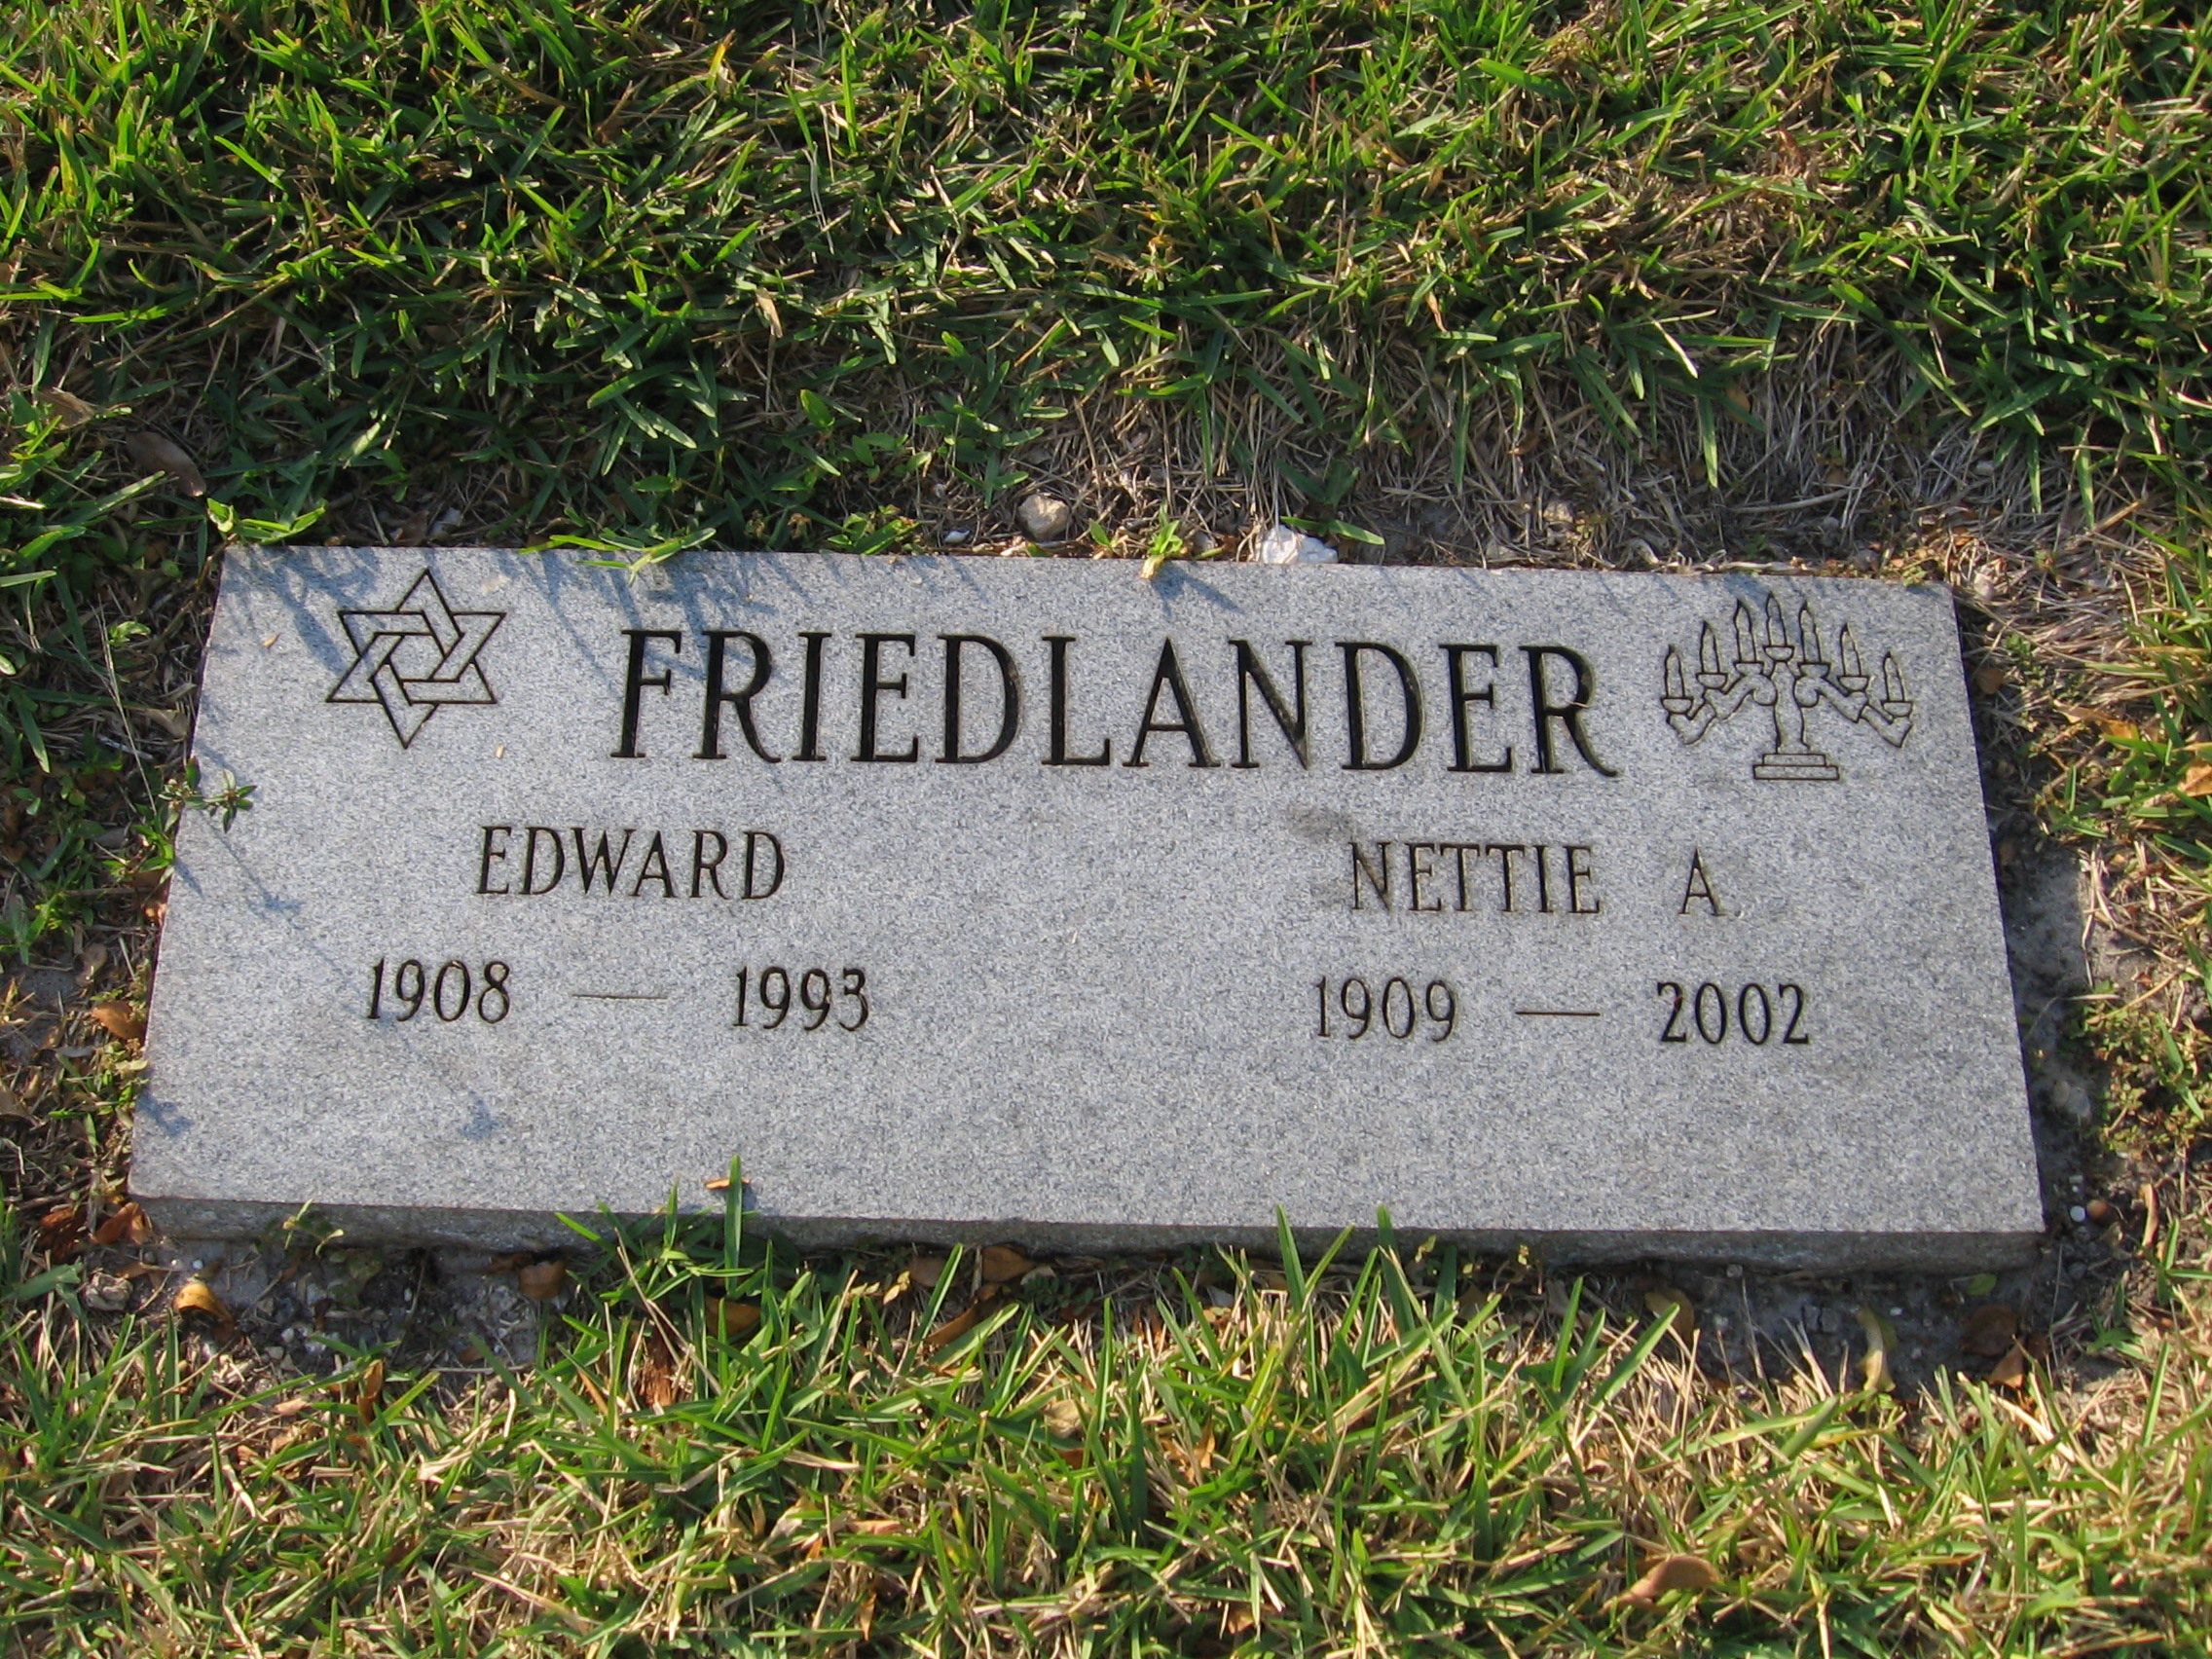 Edward Friedlander